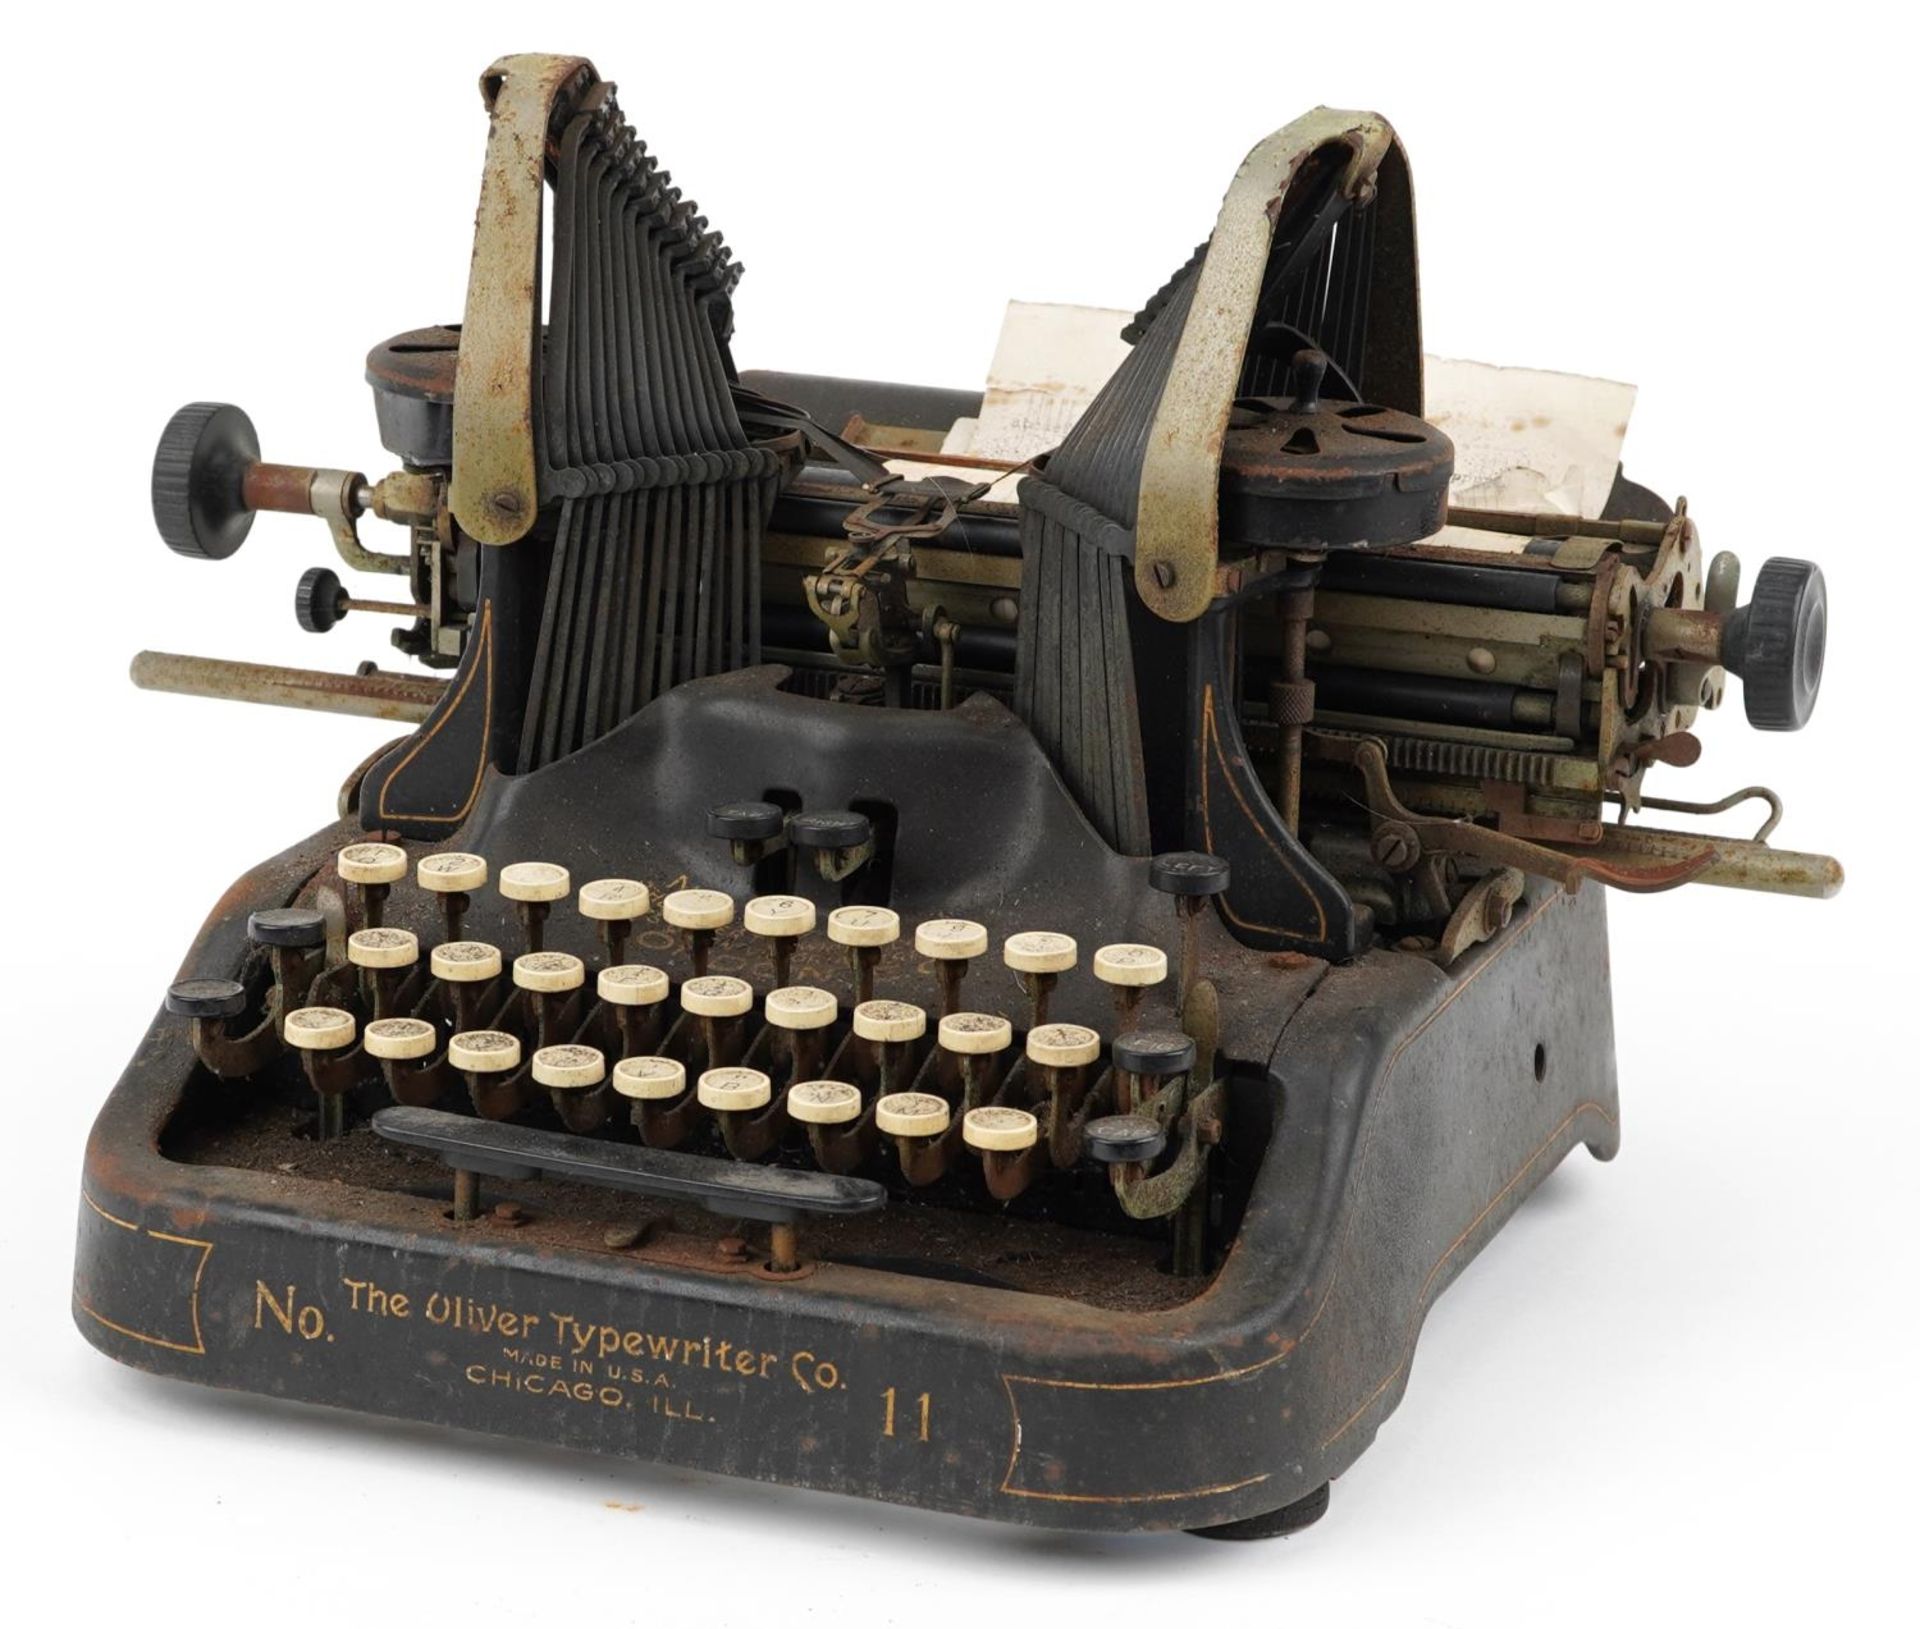 Vintage Oliver no 11 typewriter : For further information on this lot please visit